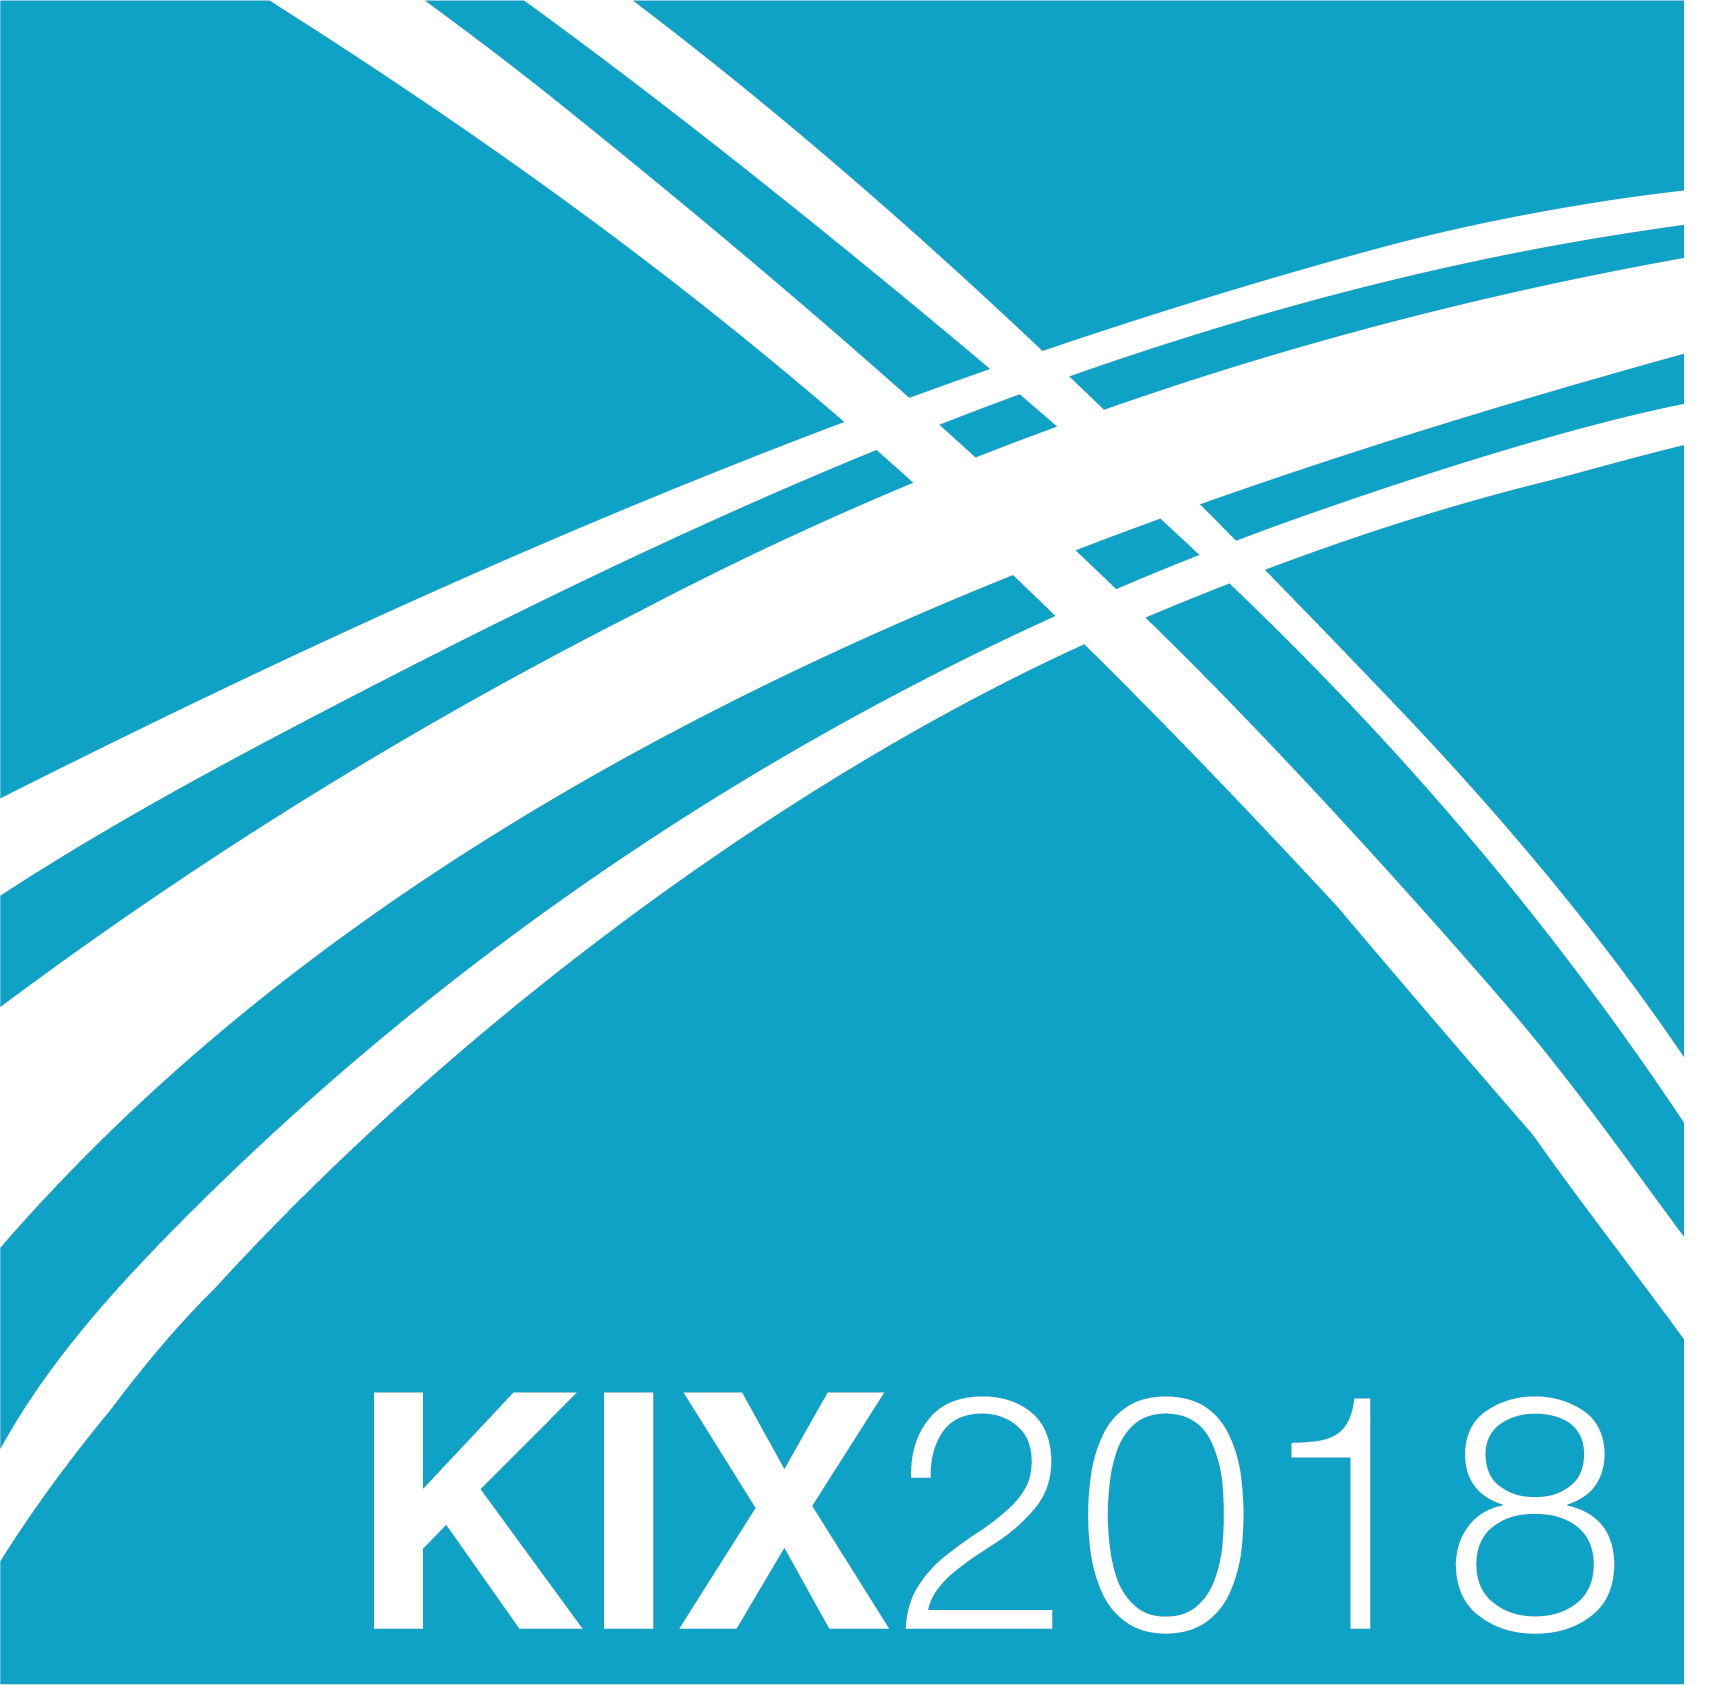 KIX 2018 logo